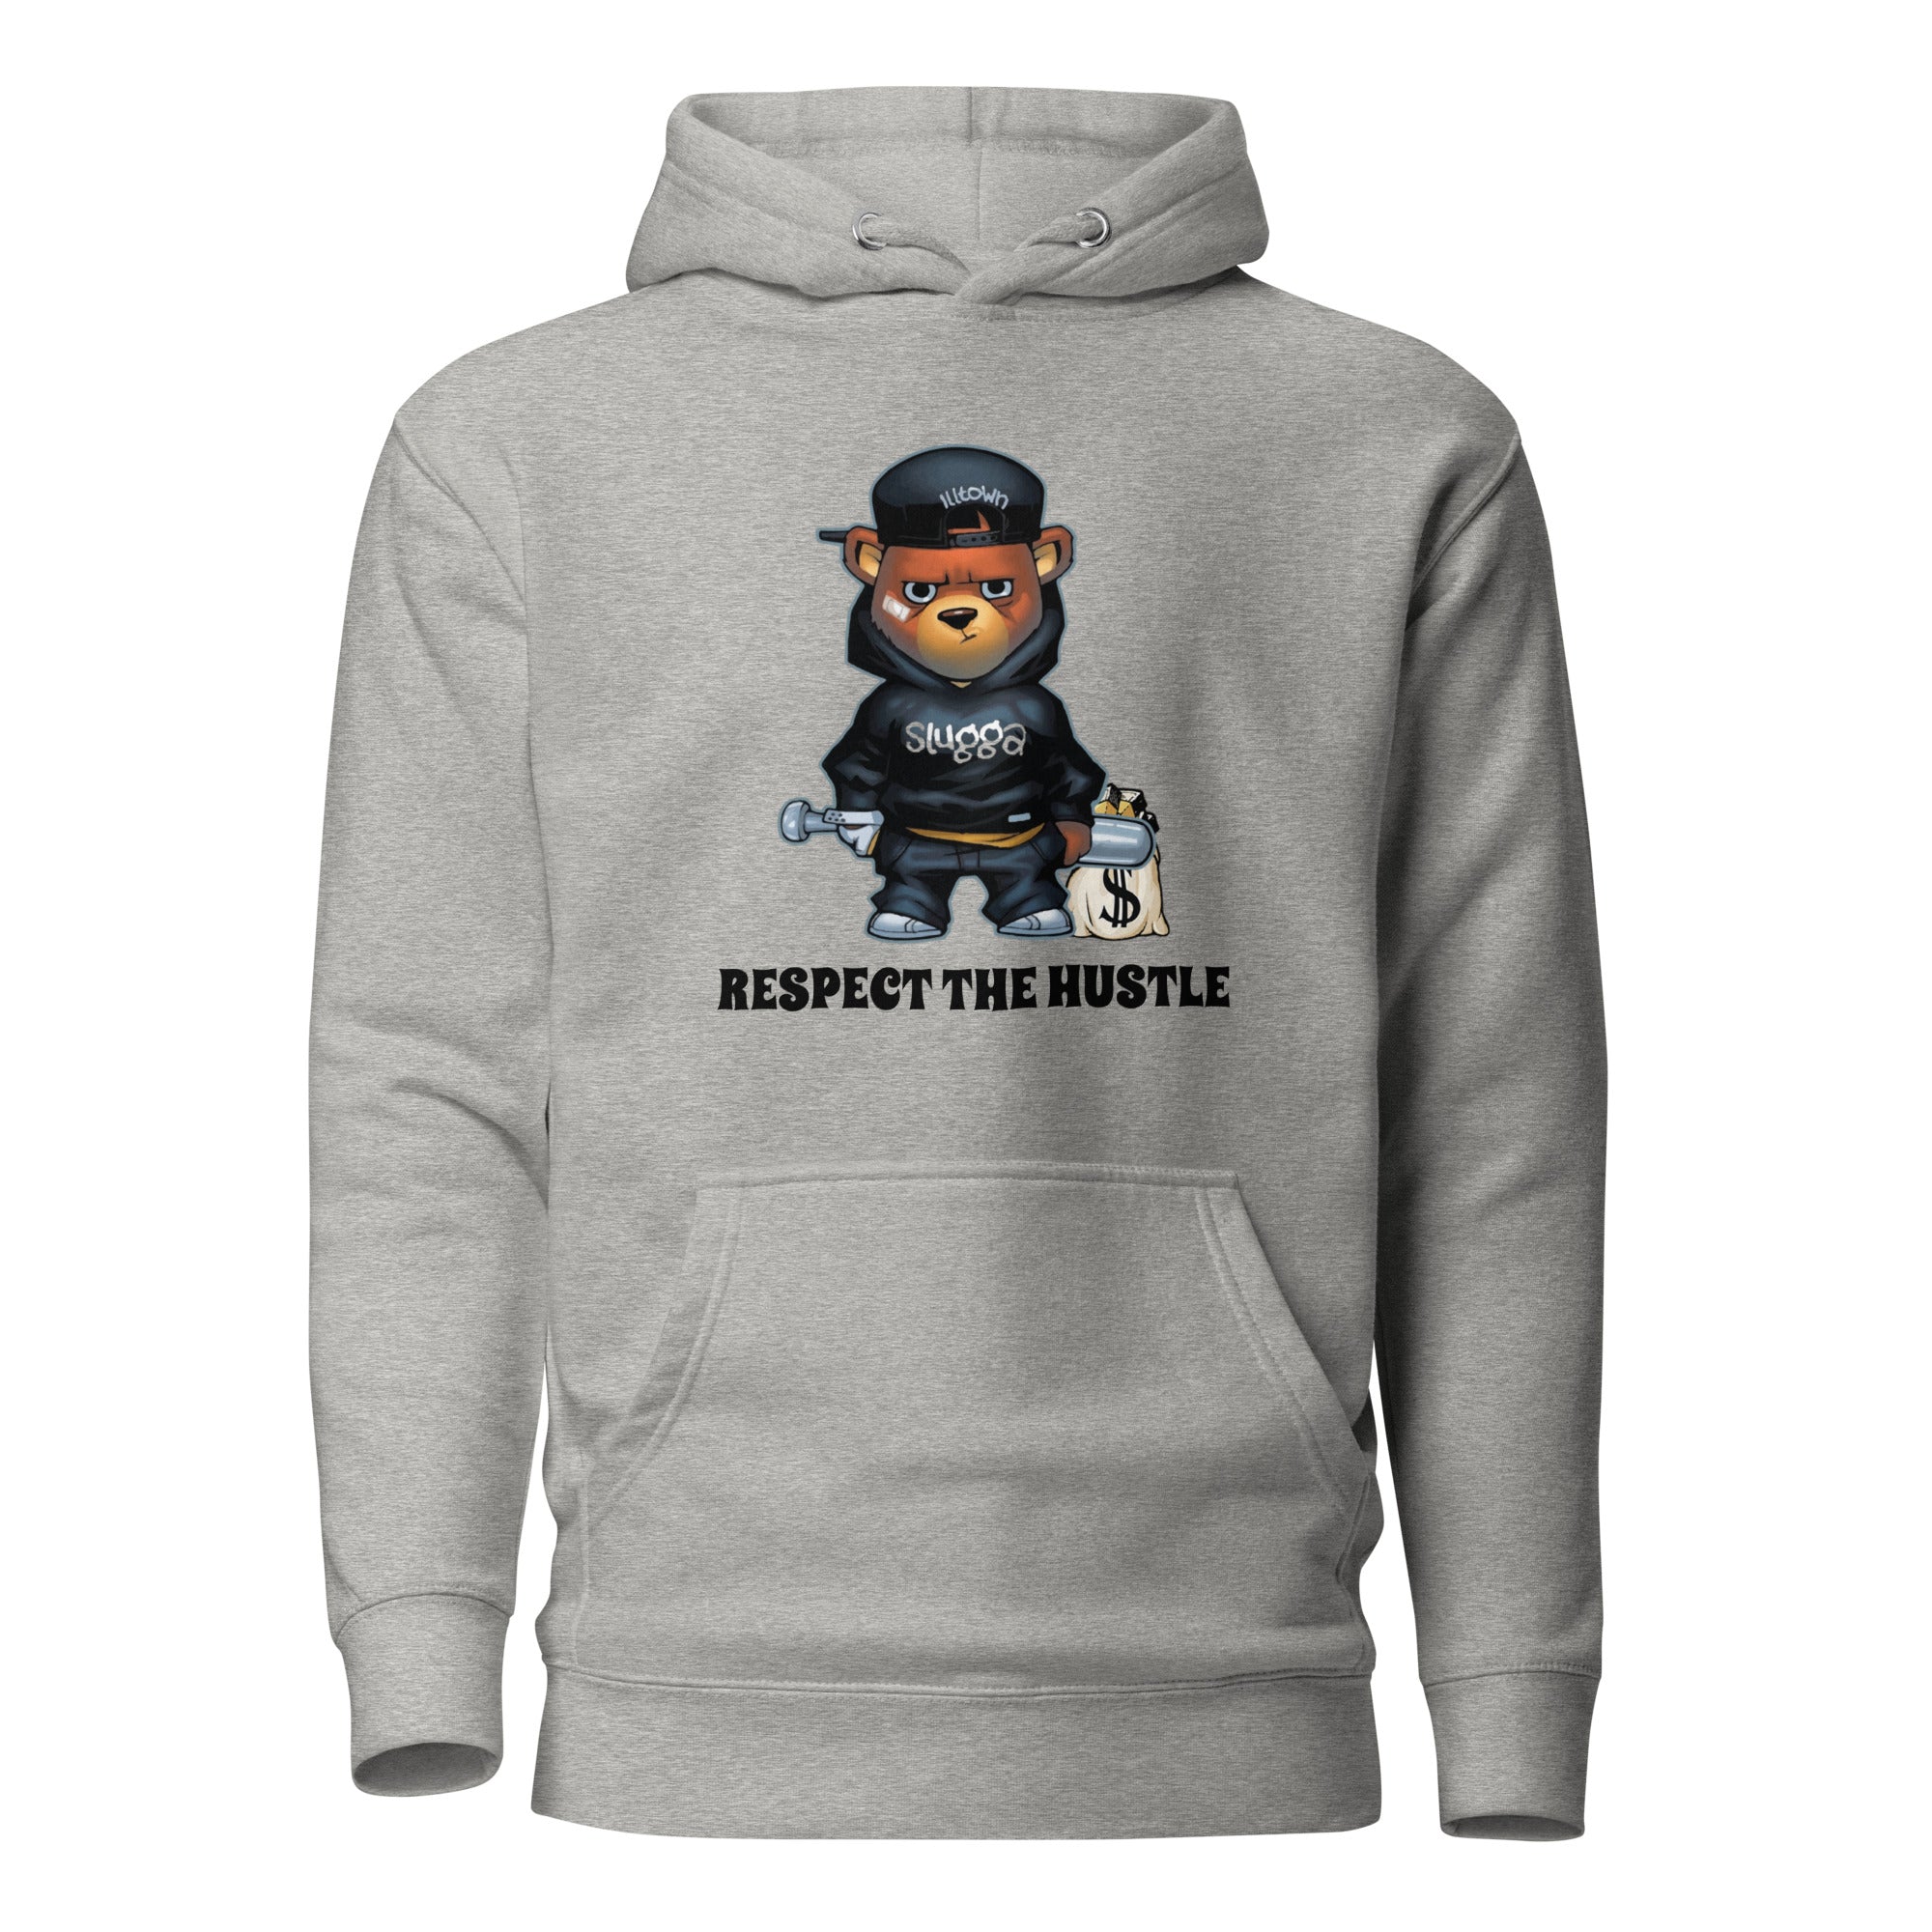 Men's Graphic Hoodie "TEDDY BEAR SLUGGA"